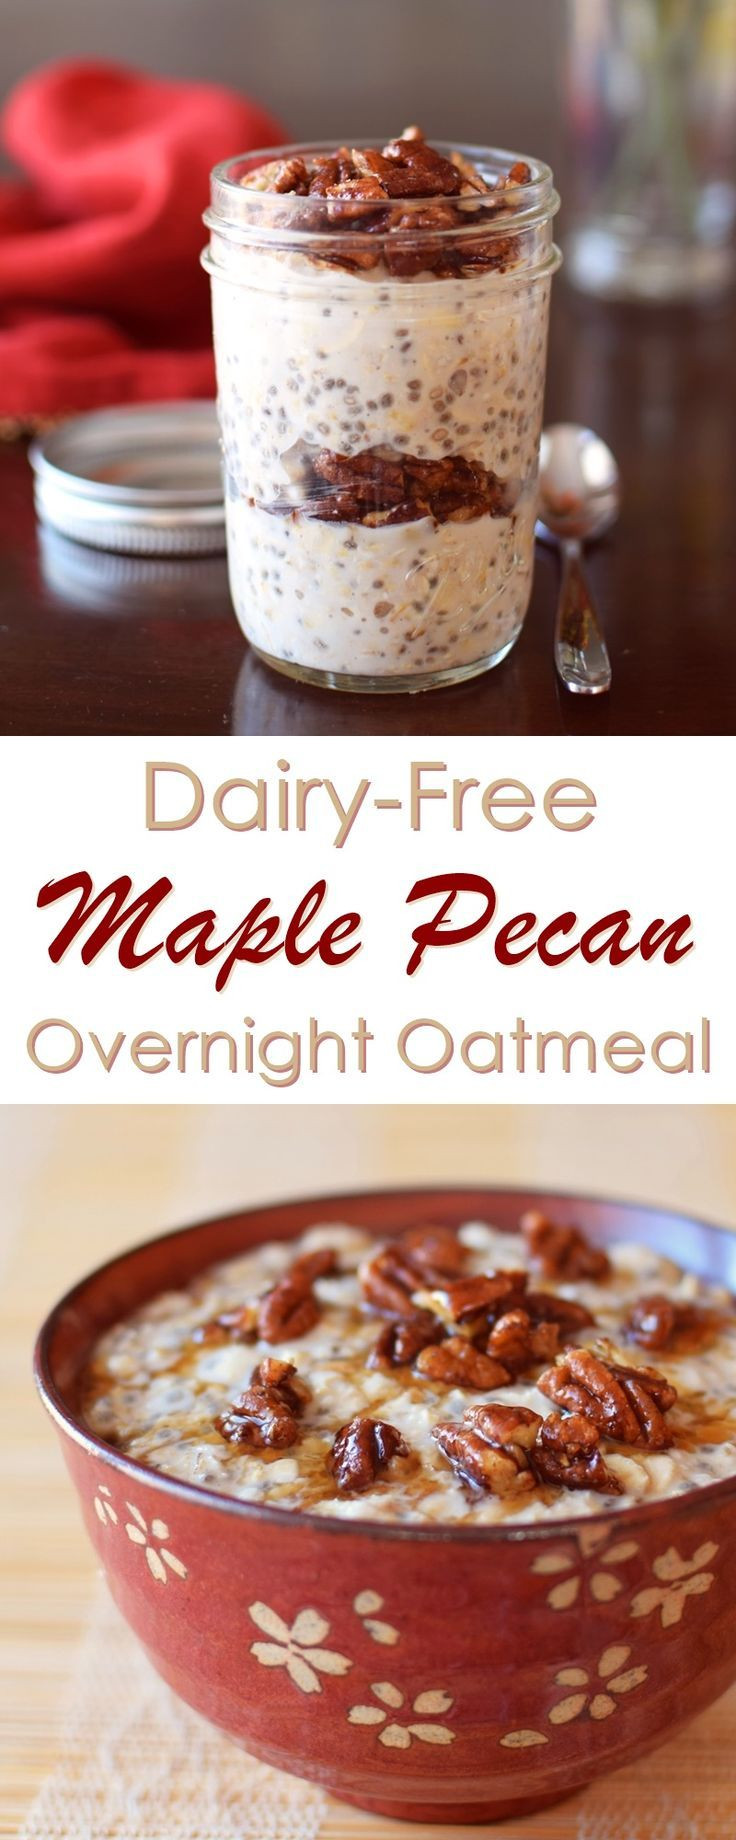 Vegan Brunch Recipes Make Ahead
 Maple Pecan Overnight Oatmeal Recipe